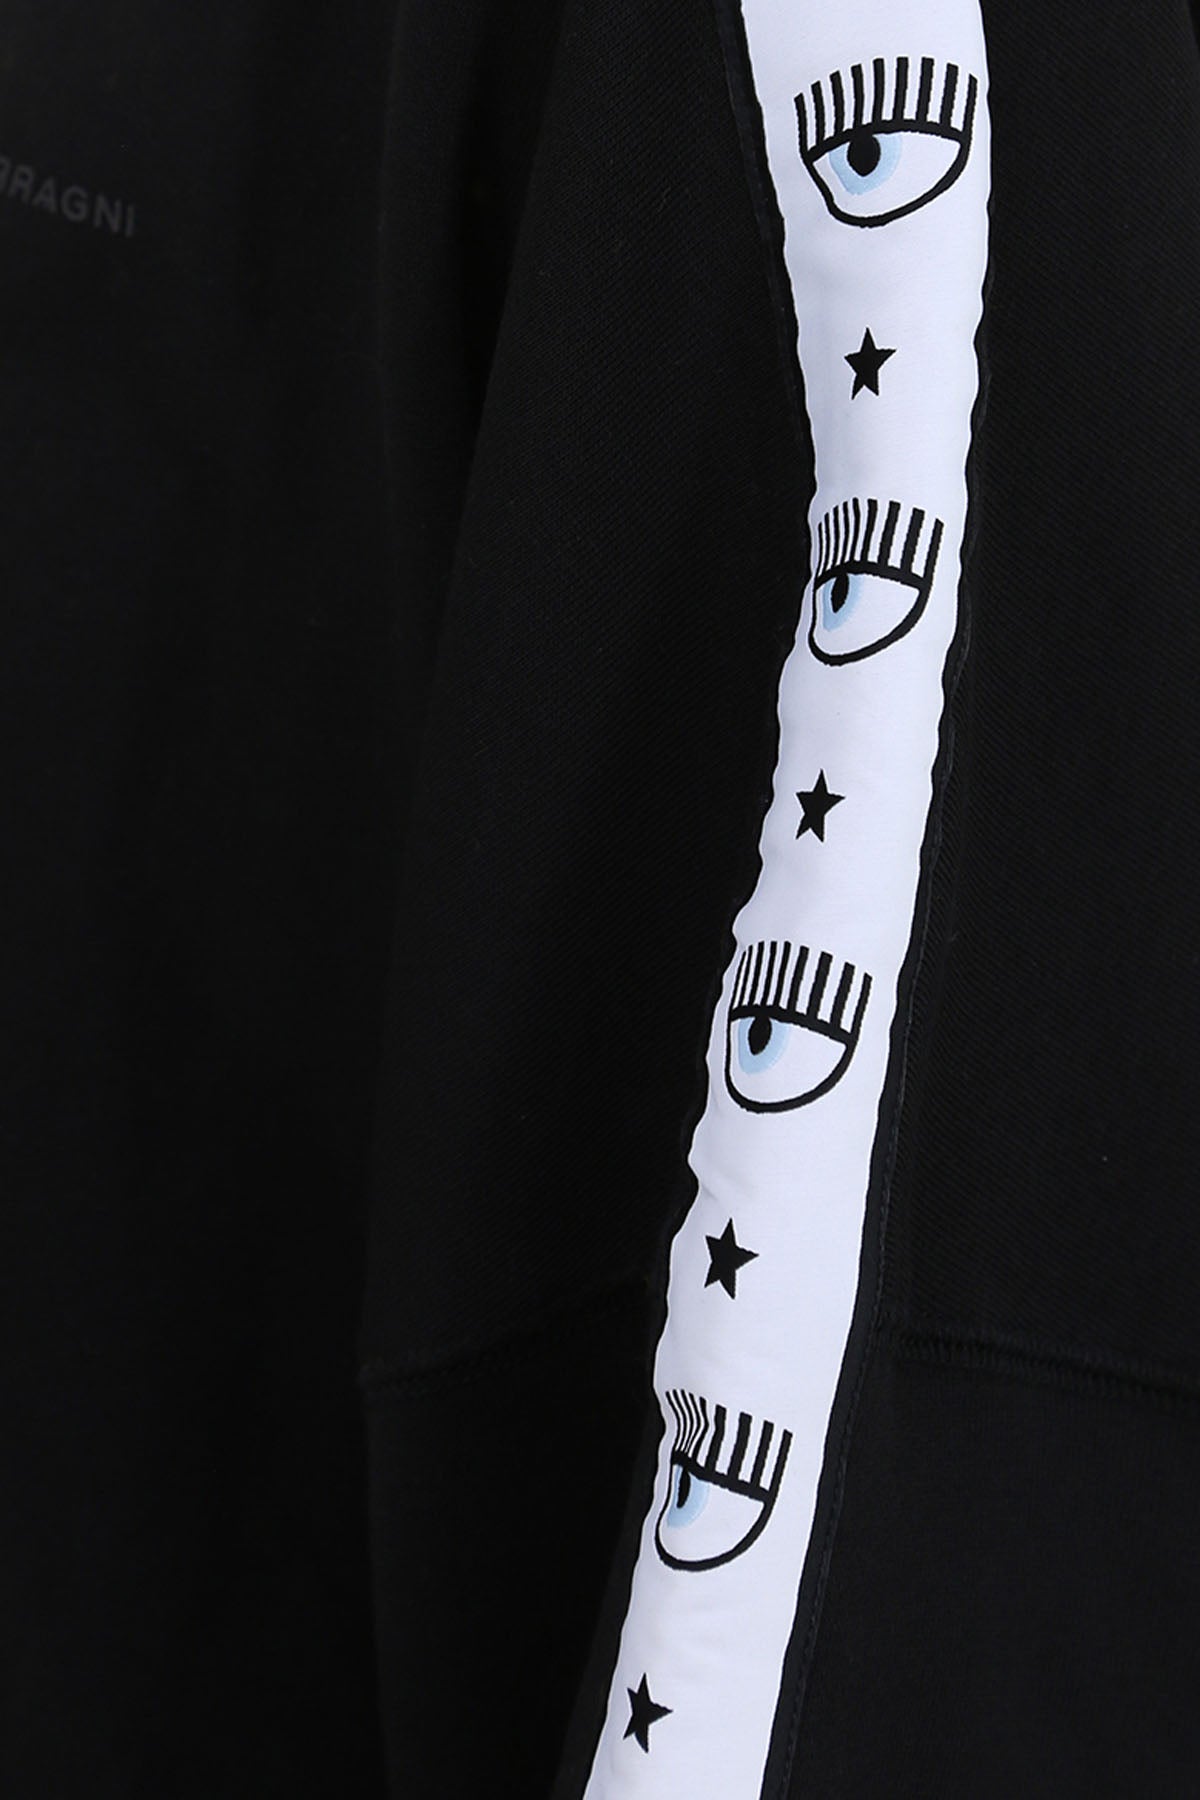 Chiara Ferragni Göz Logo Şeritli Geniş Kesim Sweatshirt-Libas Trendy Fashion Store